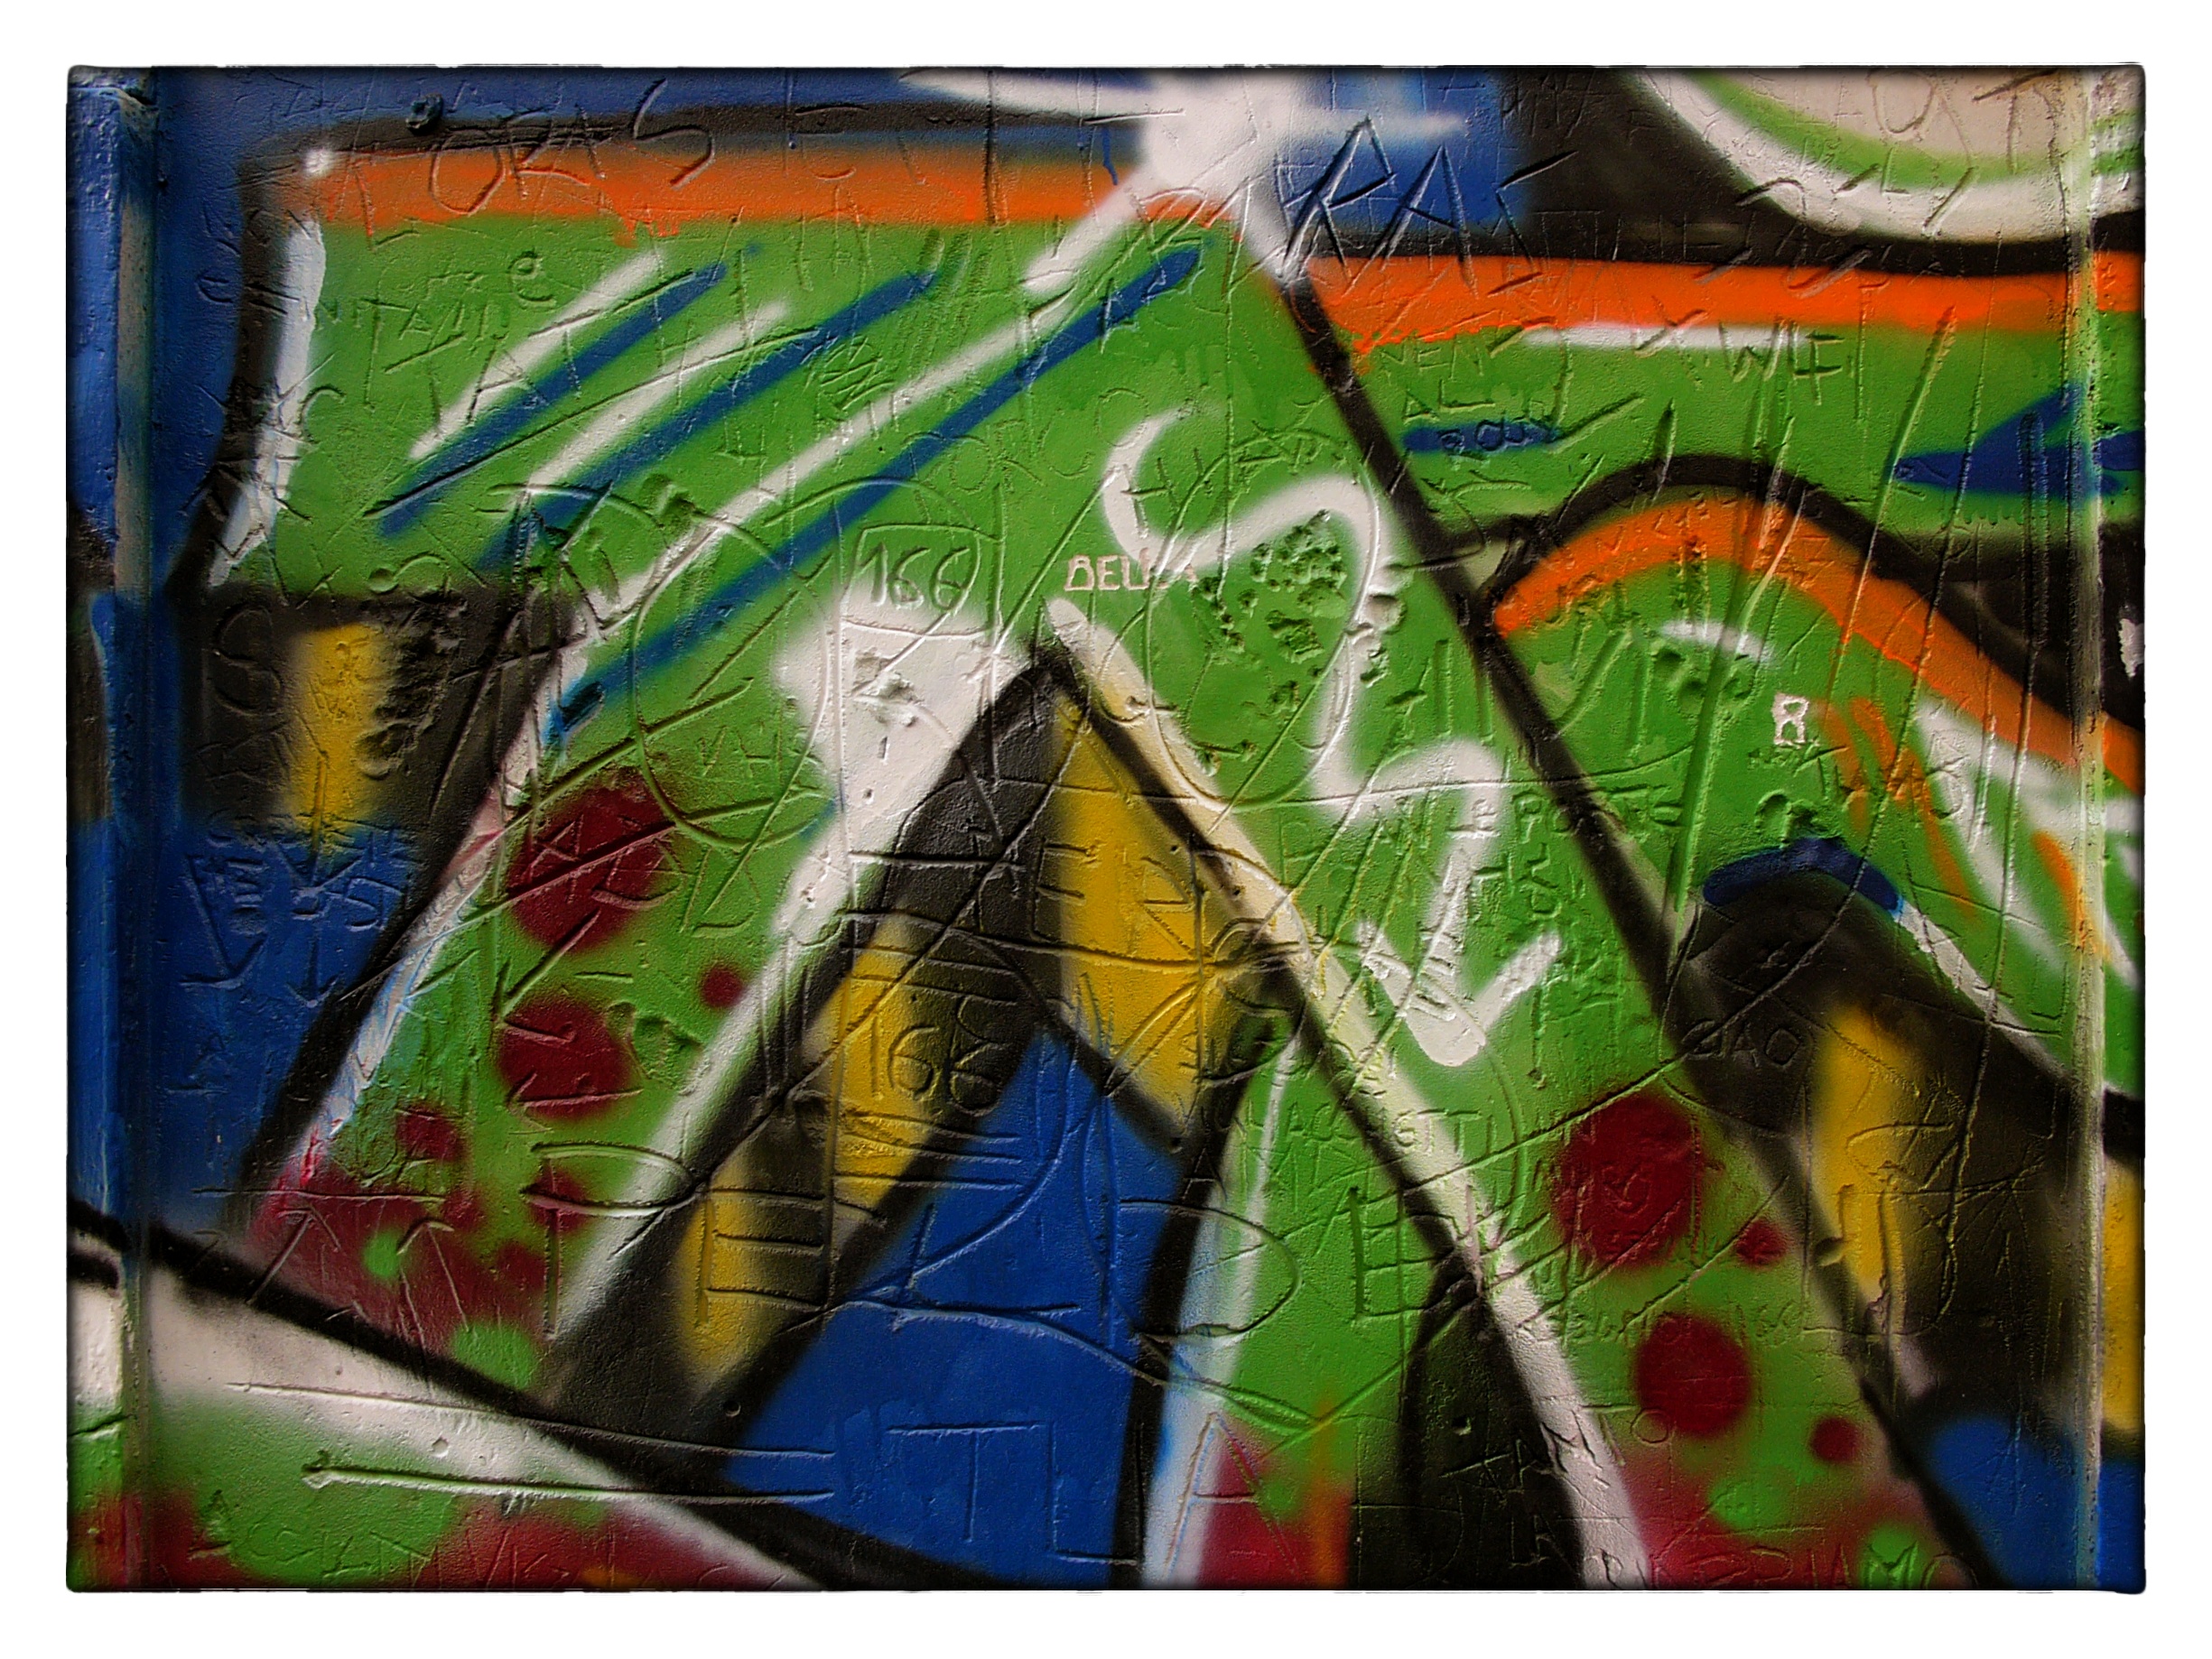    Graffiti over graffiti: Rome, May04 Leica Digilux-2   